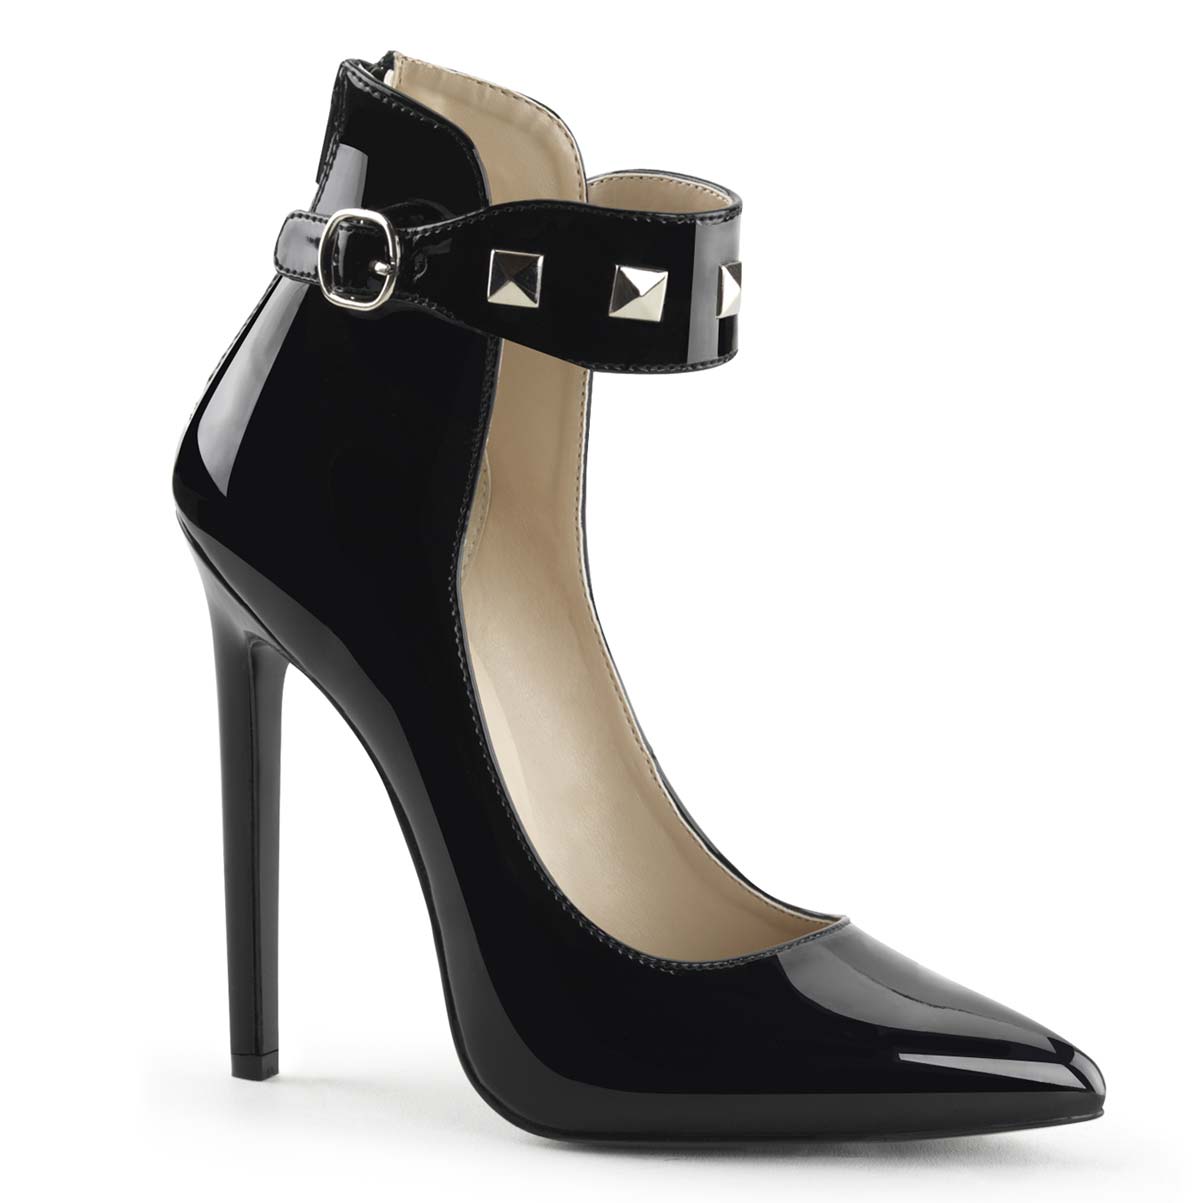 Pleaser SEXY-31 - Black Patent in Sexy Heels & Platforms - $39.59